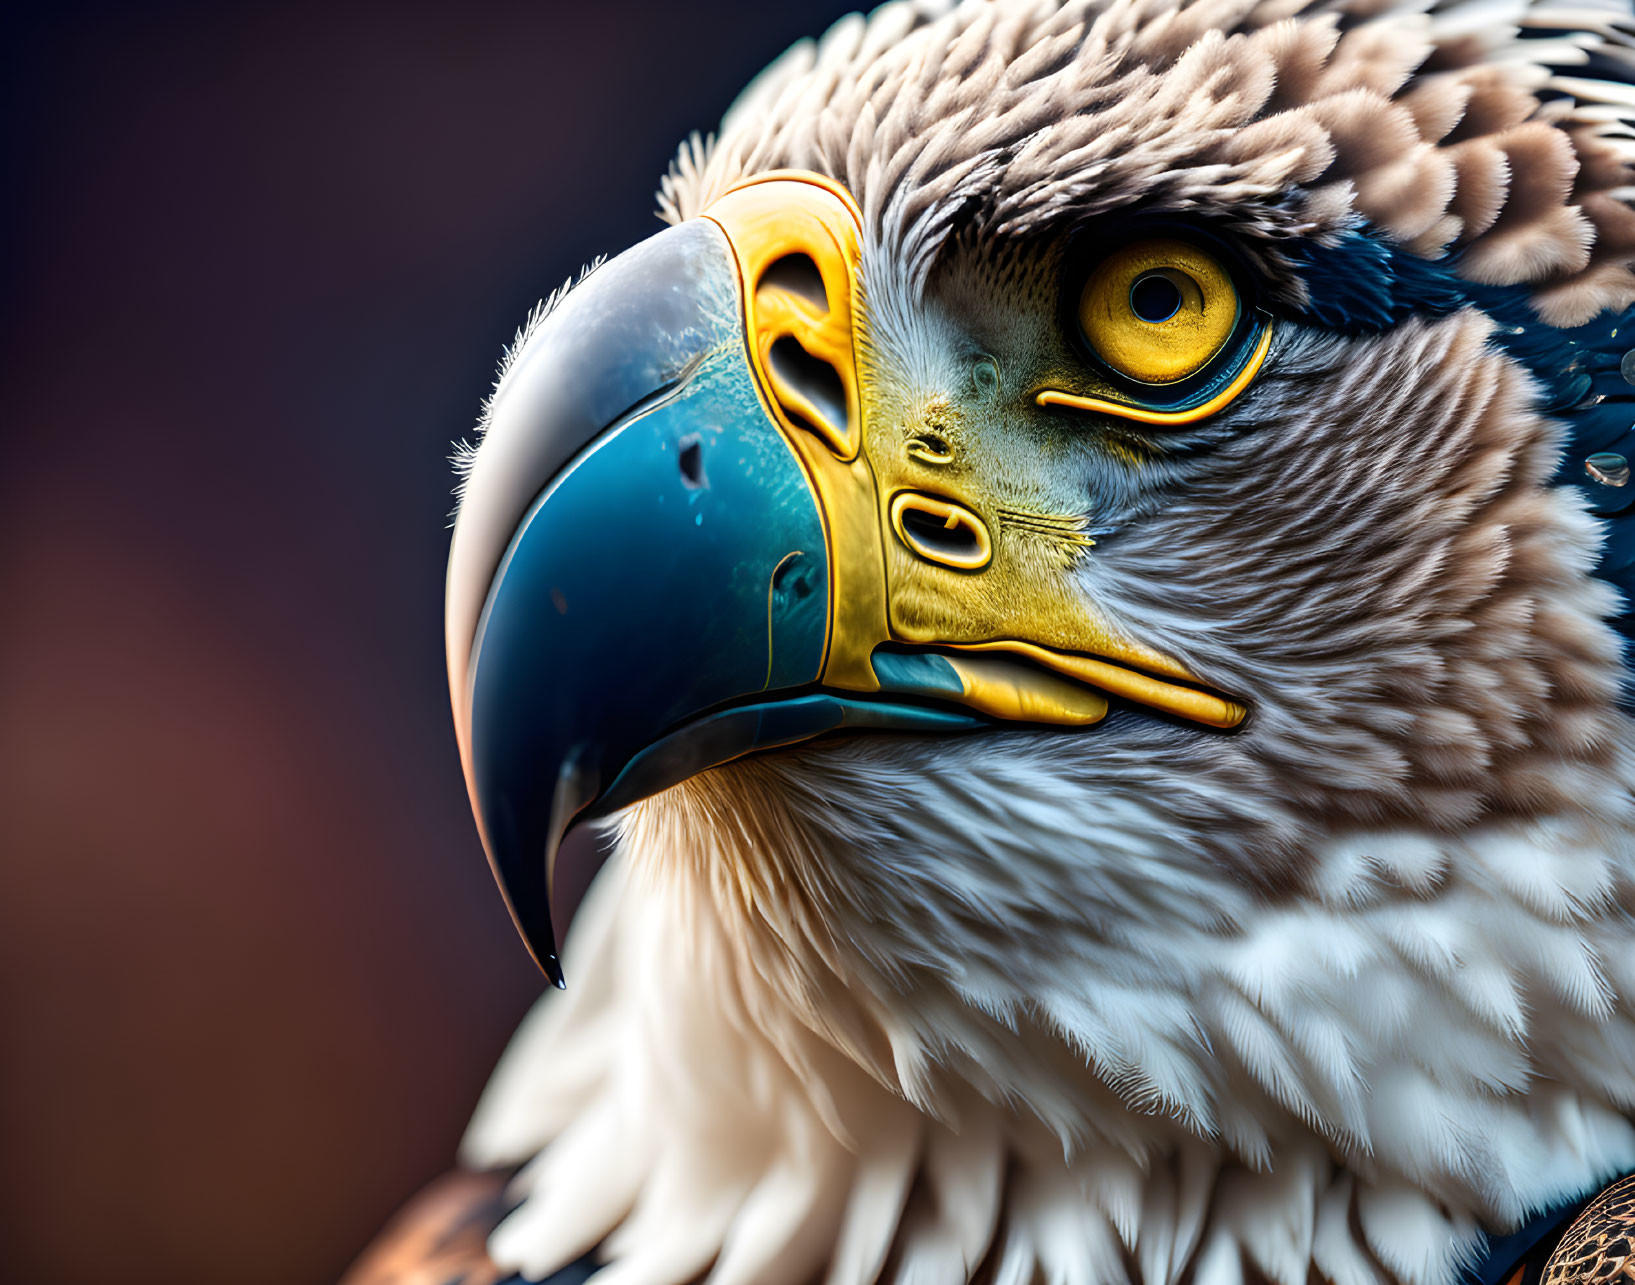 Detailed close-up of eagle's sharp beak and intense yellow eye